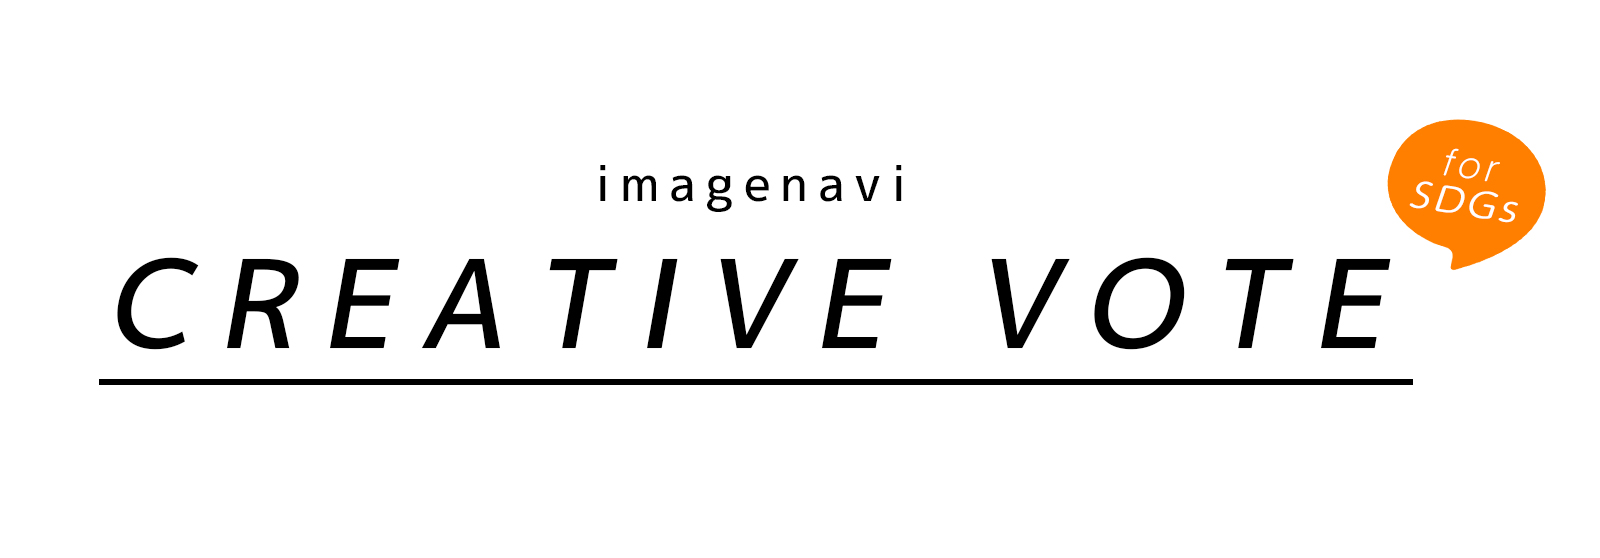 imagenavi CREATIVE VOTE for SDGs